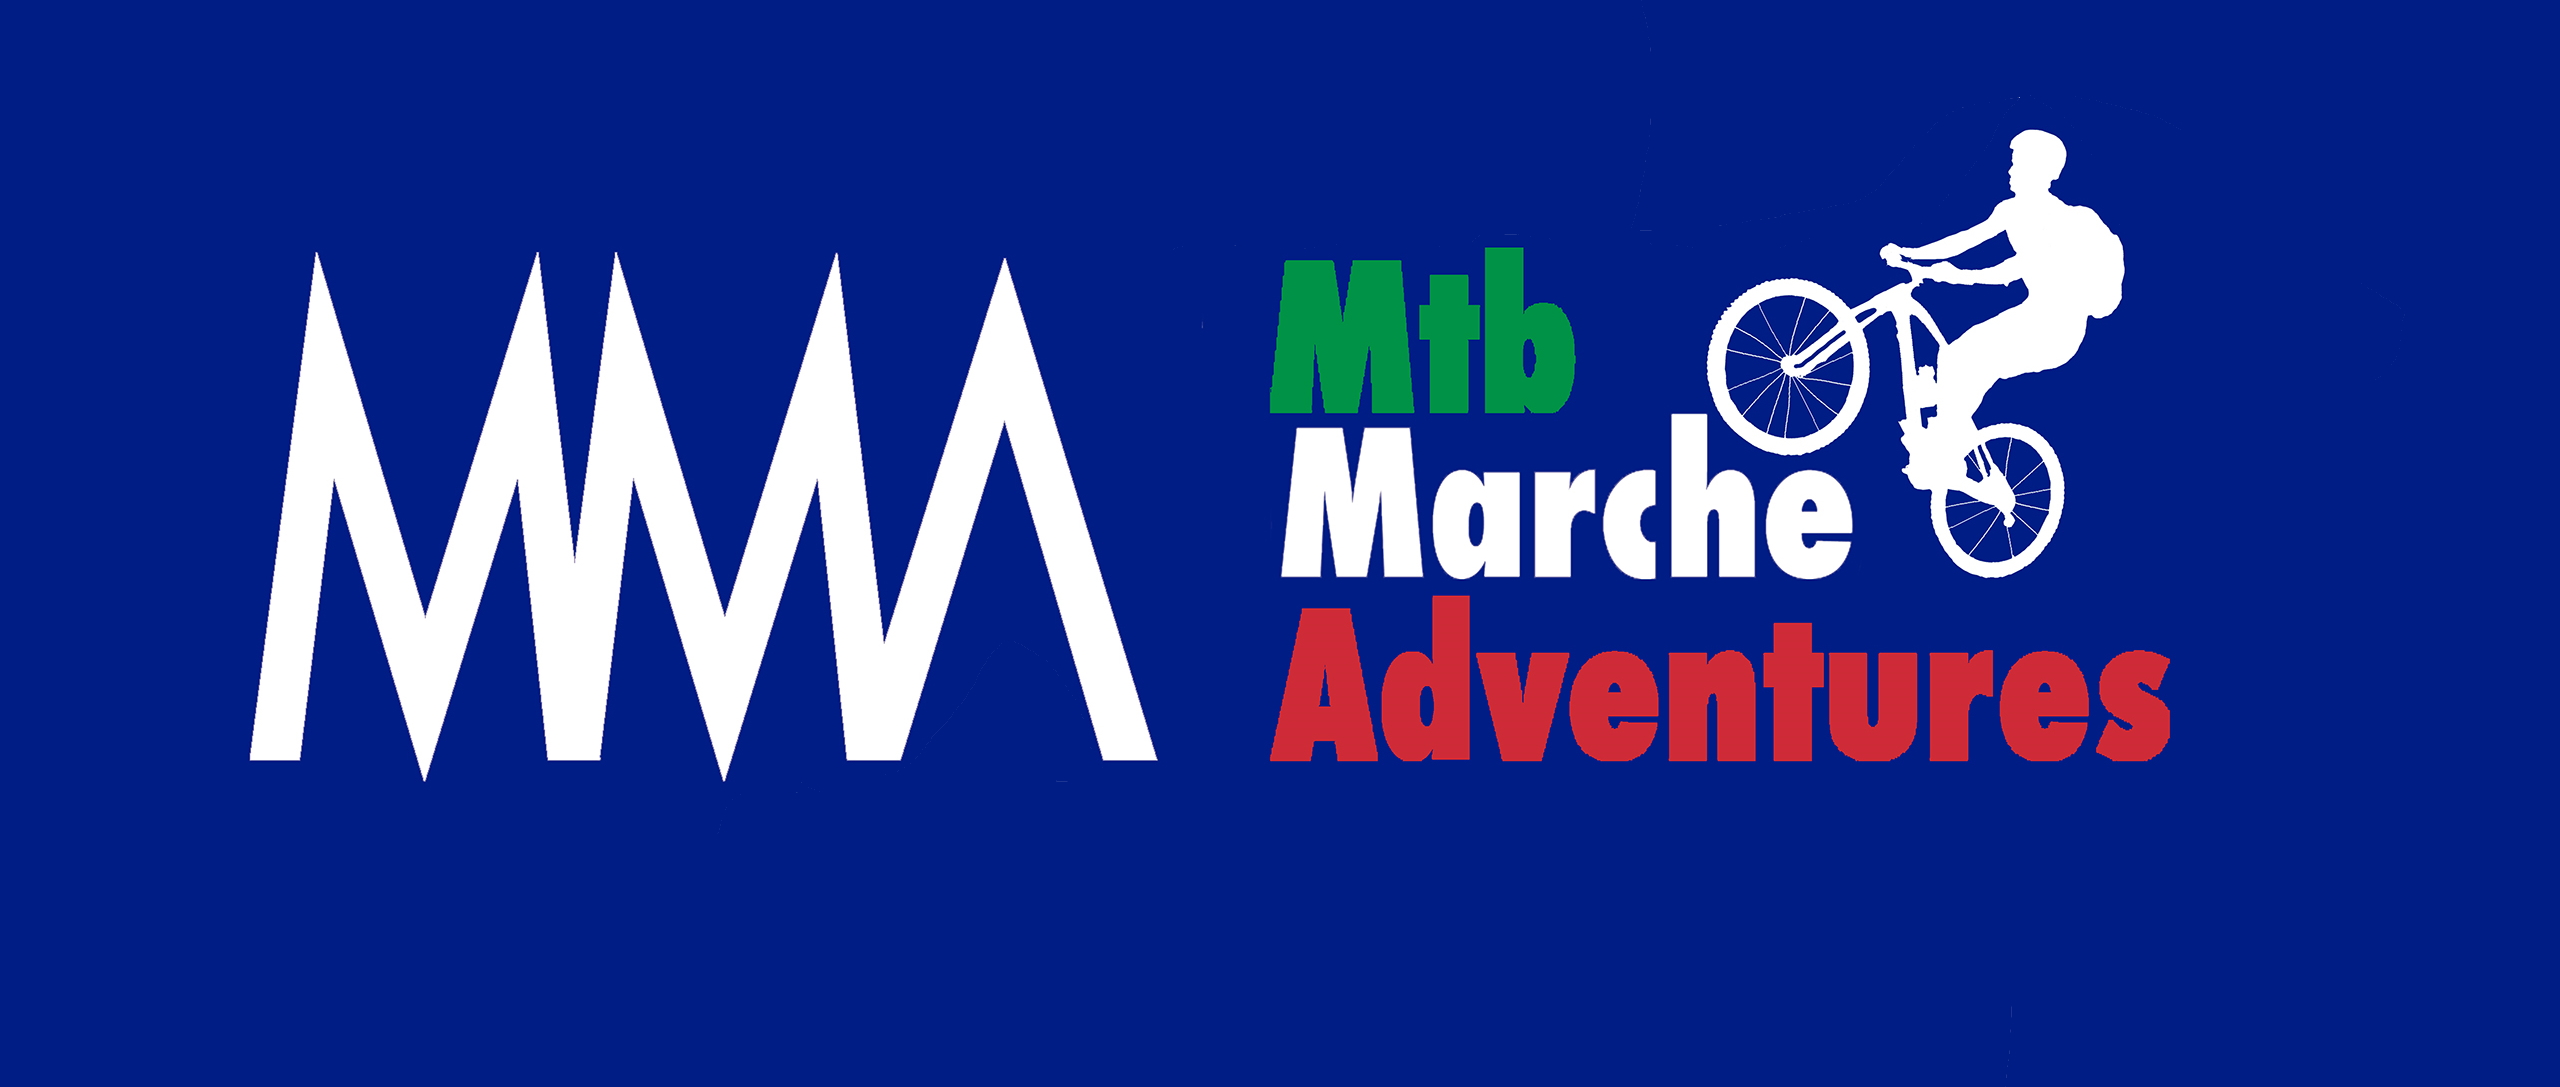 logo tricolore mtb marche adventures